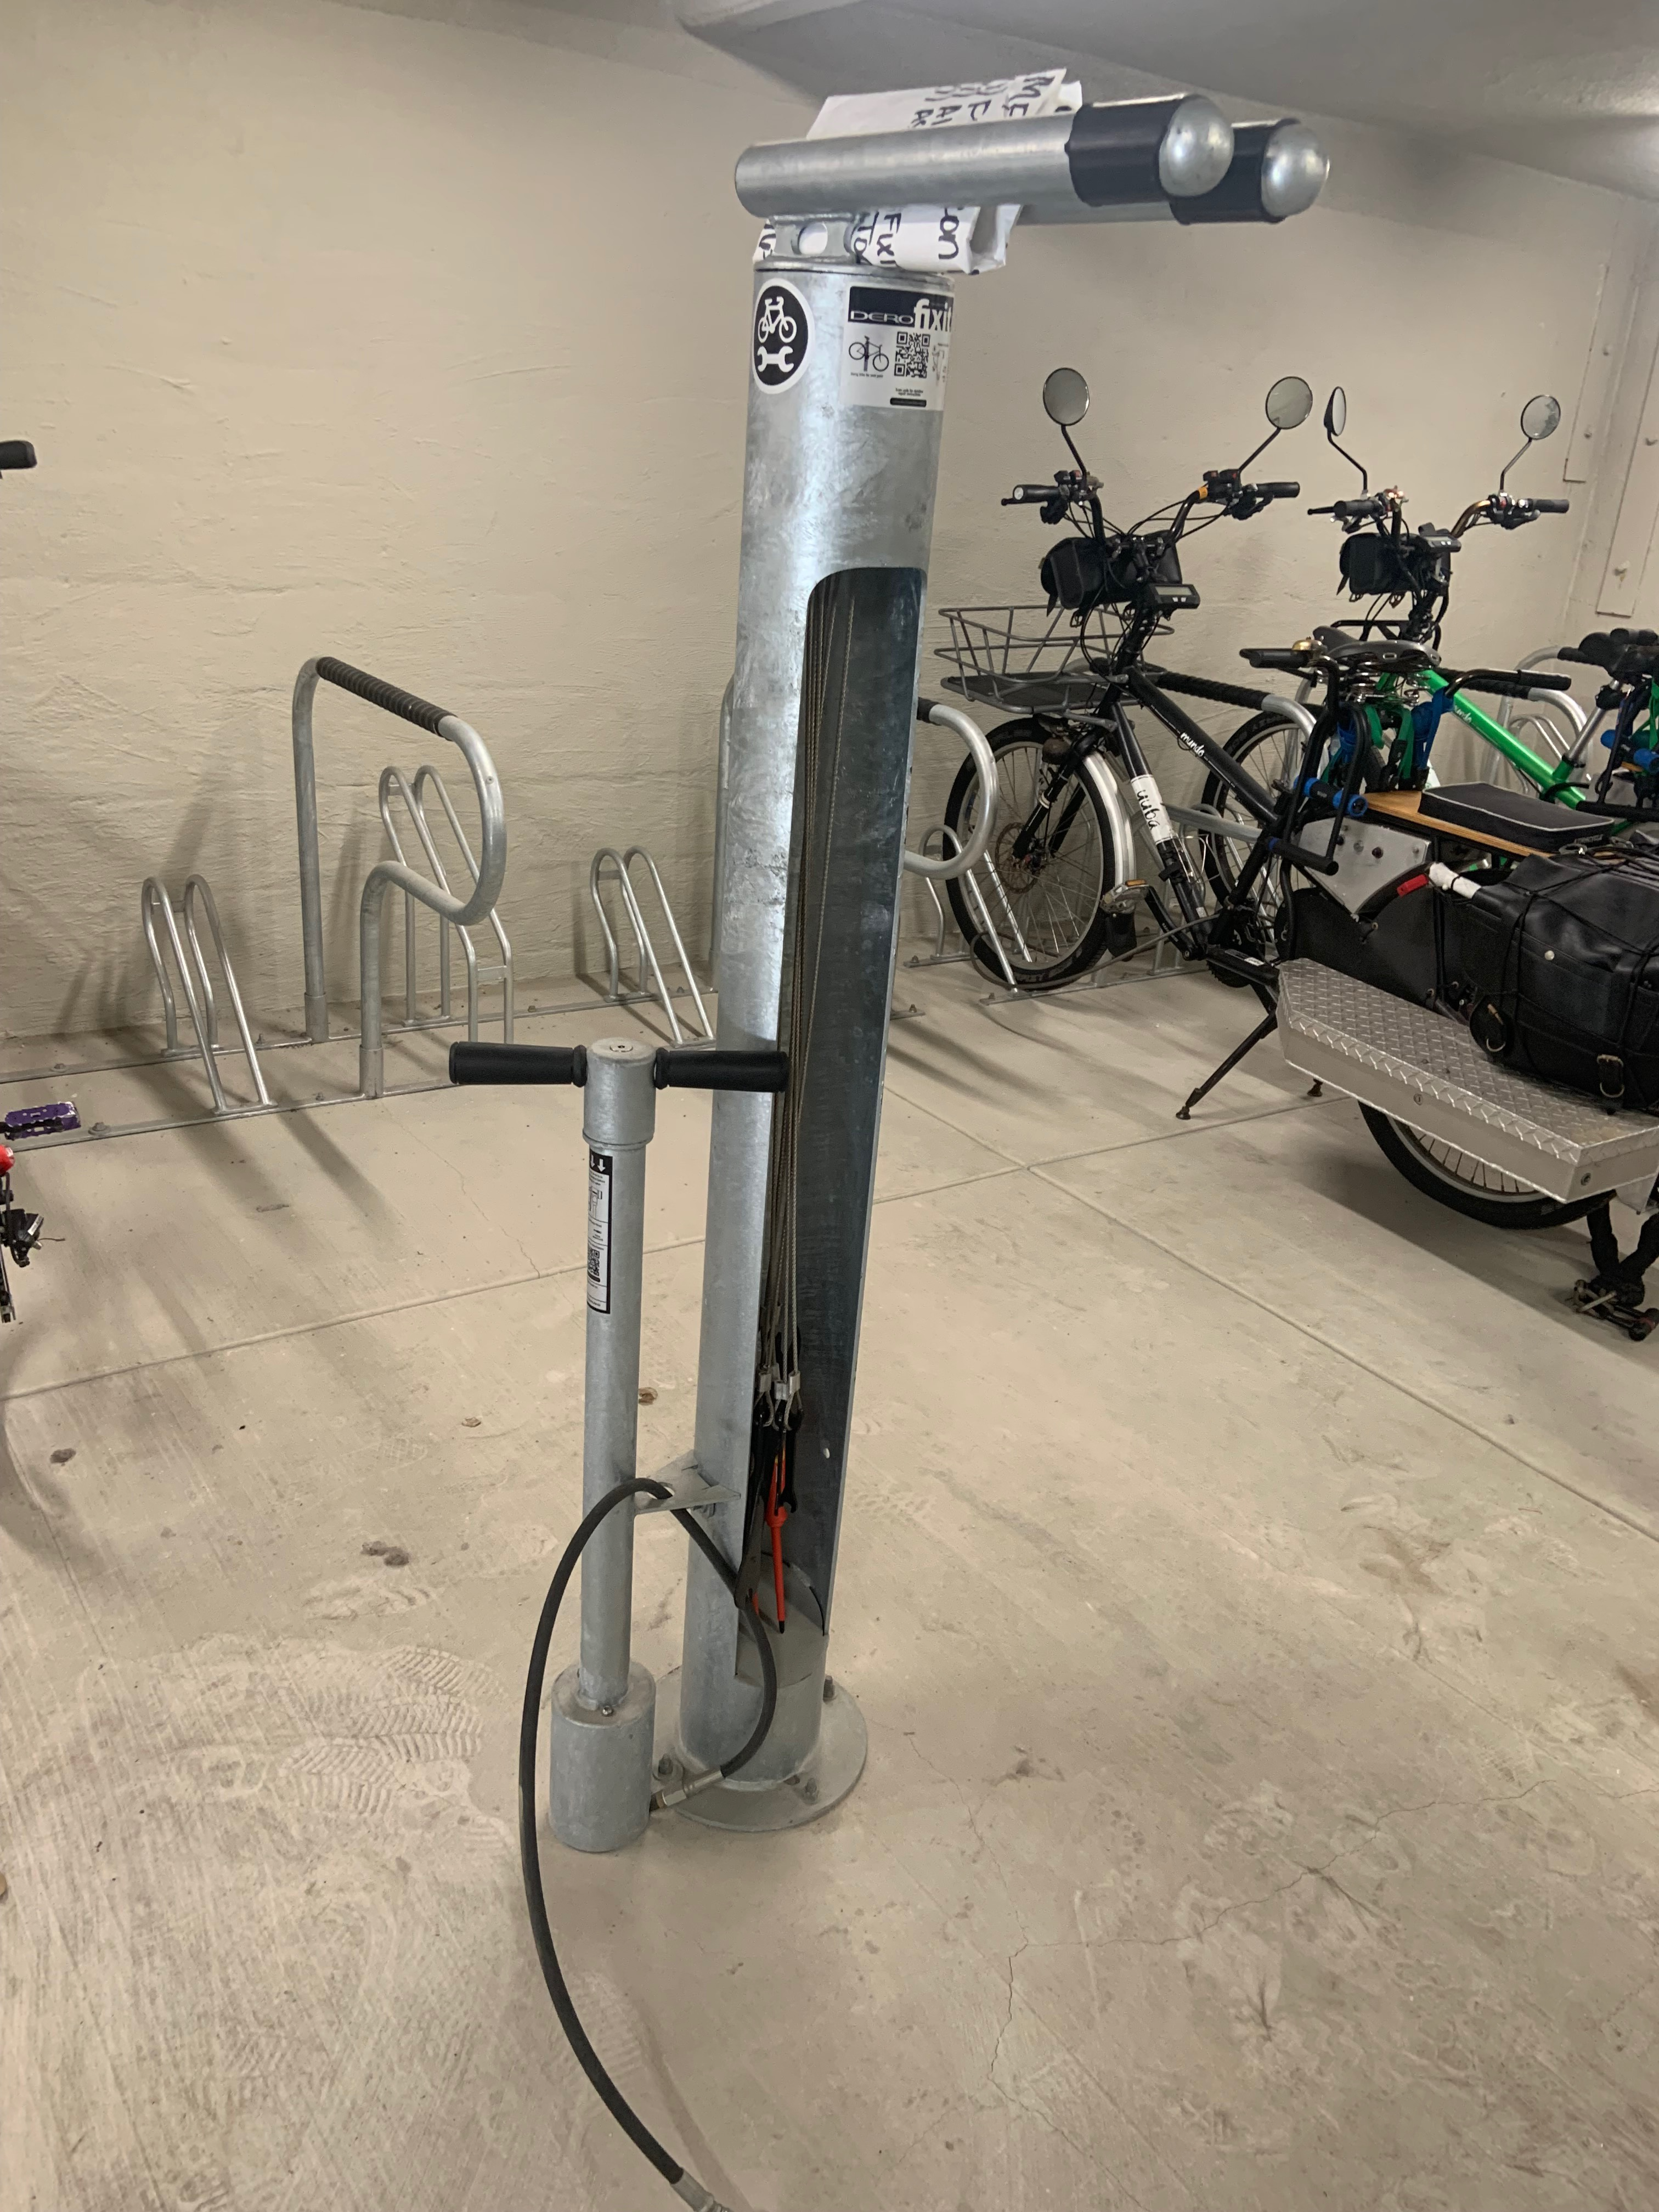 Bike fix kit in the storage room